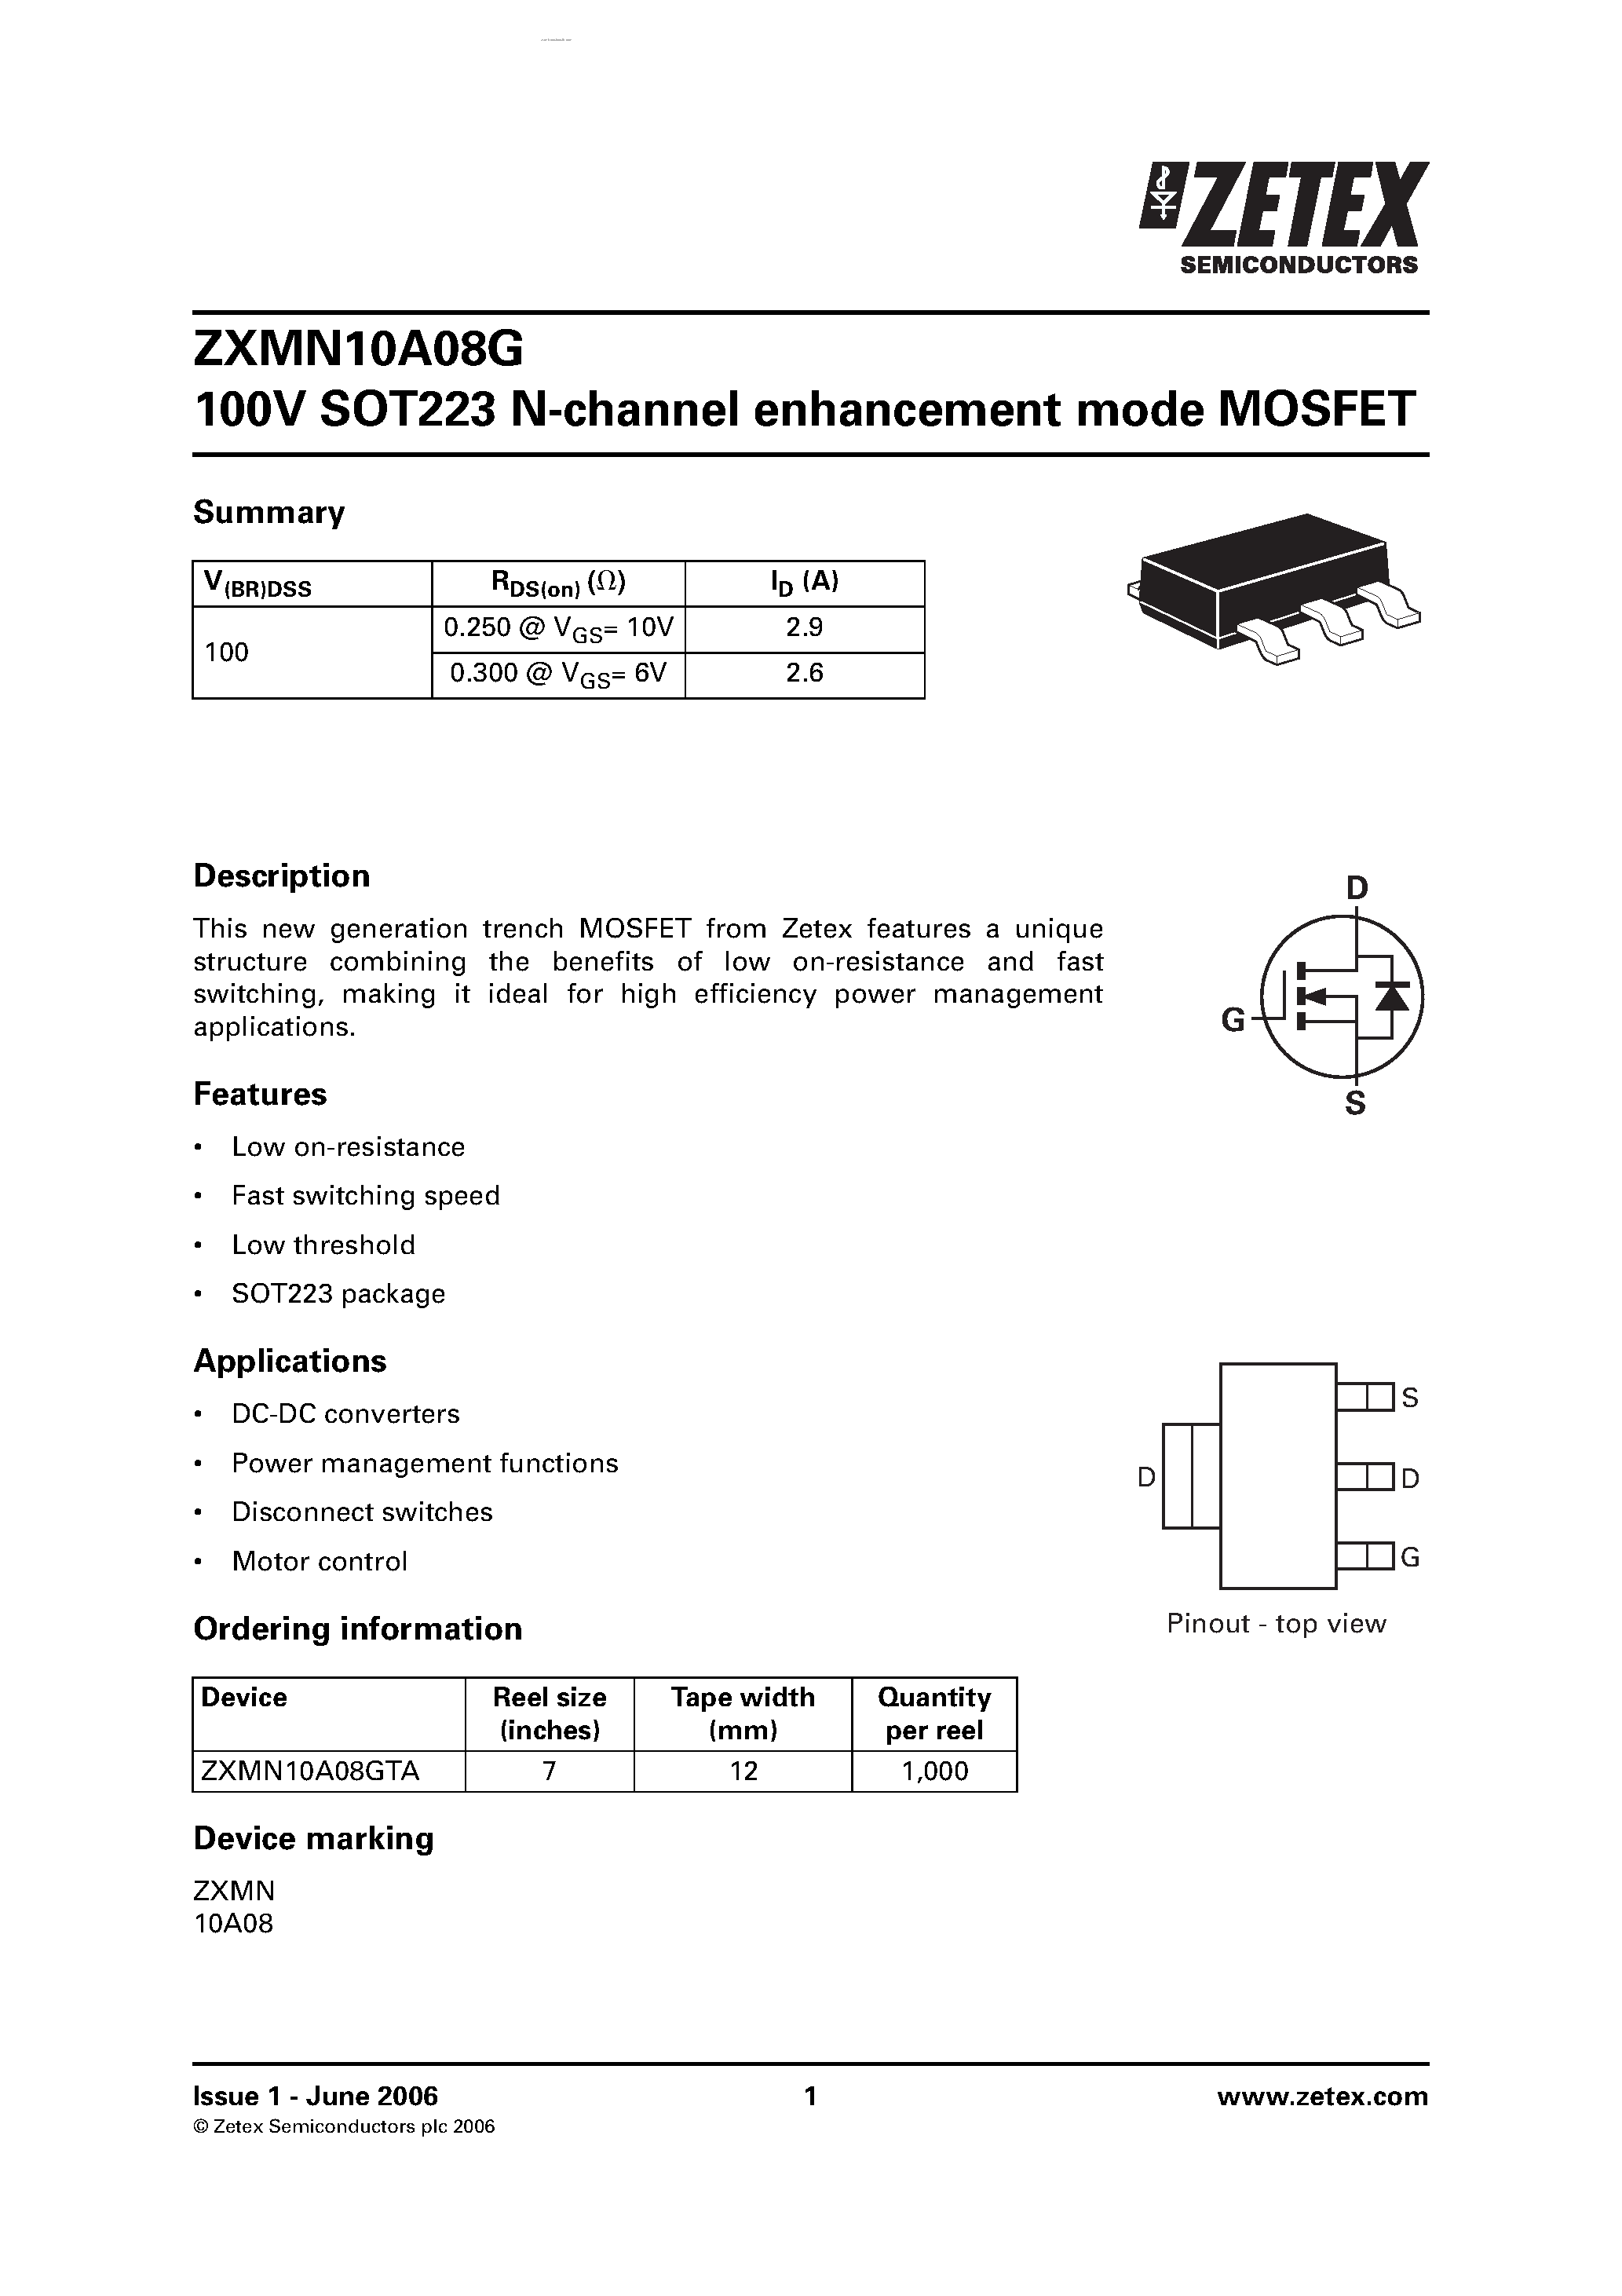 Datasheet ZXMN10A08G - 100V SOT223 N-channel enhancement mode MOSFET page 1